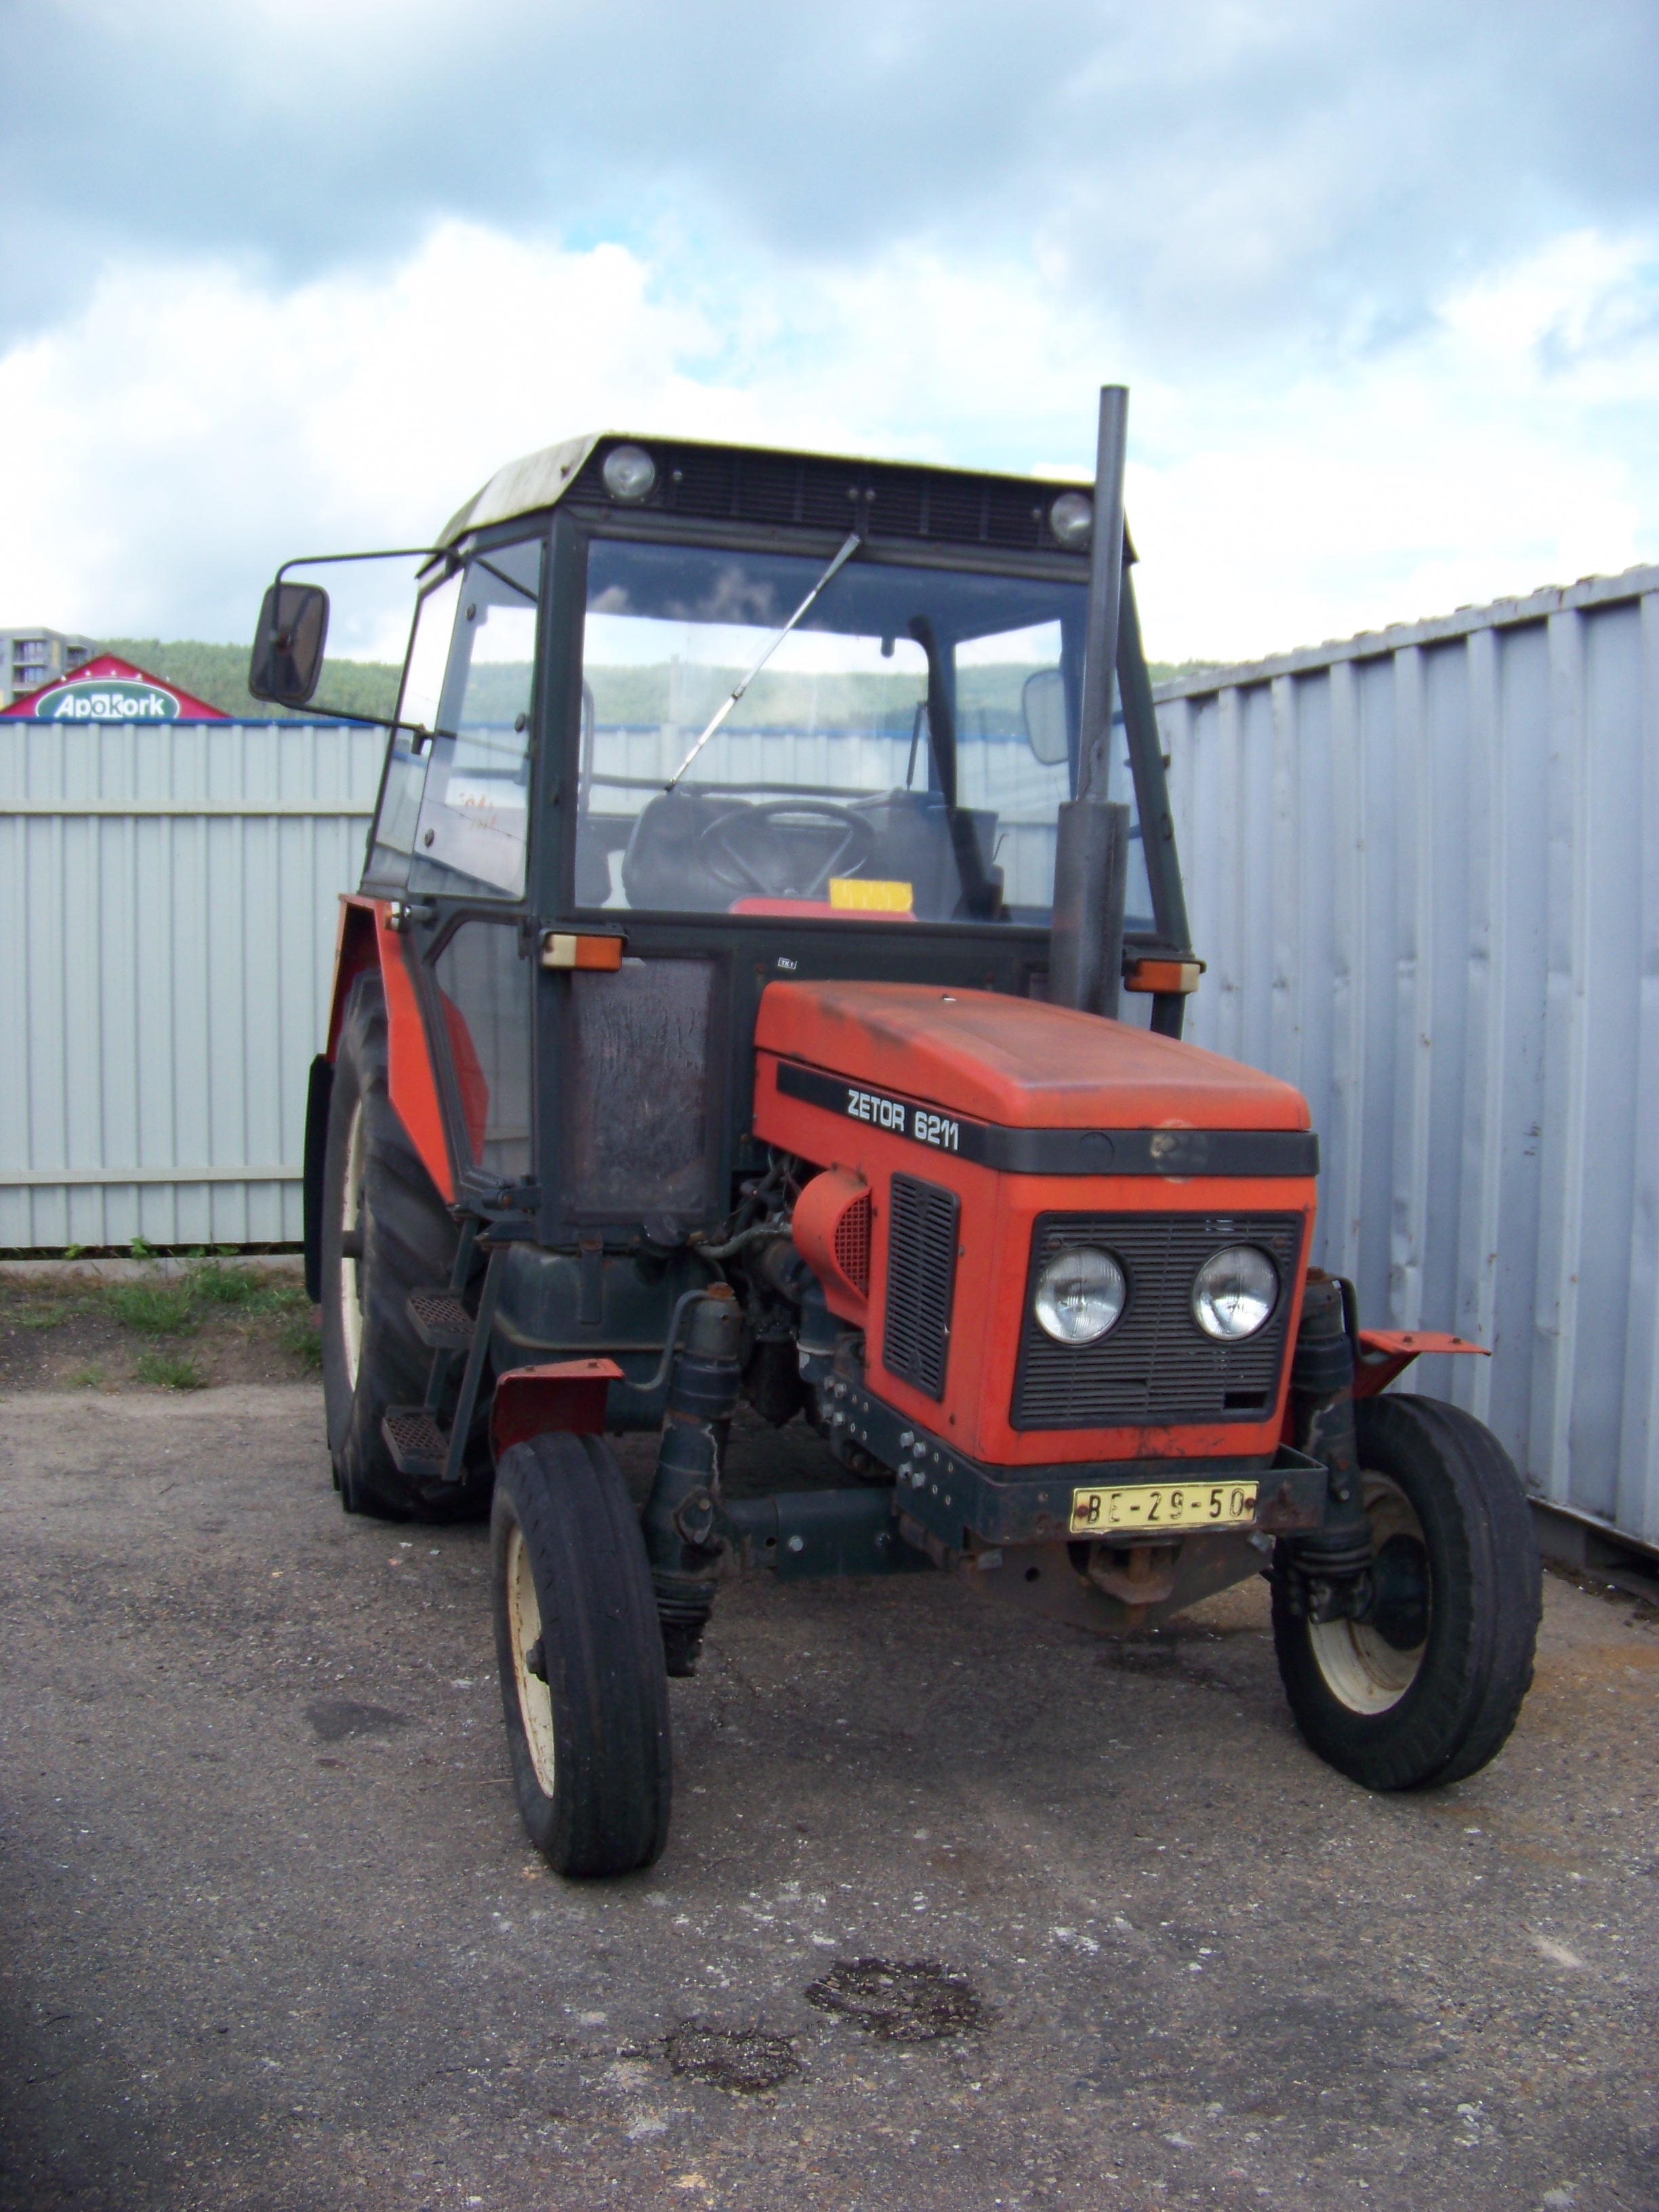 File:PROBO BUS, traktor s pluhem, zpředu.jpg - Wikimedia Commons